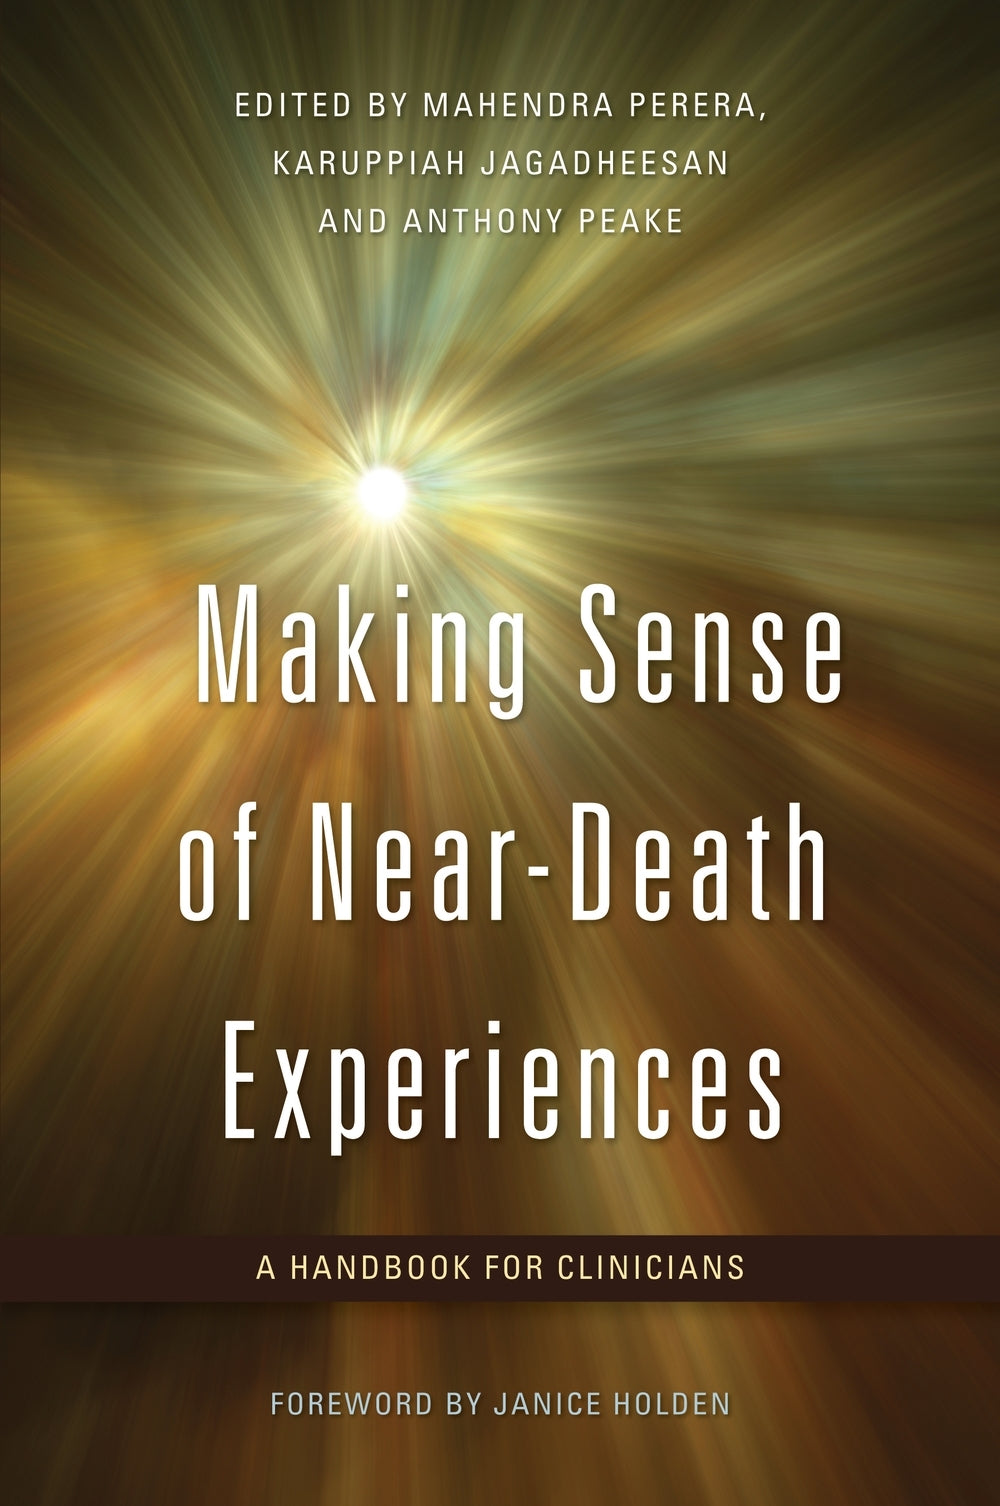 Making Sense of Near-Death Experiences by Karuppiah Jagadheesan, Anthony Peake, Mahendra Perera, No Author Listed